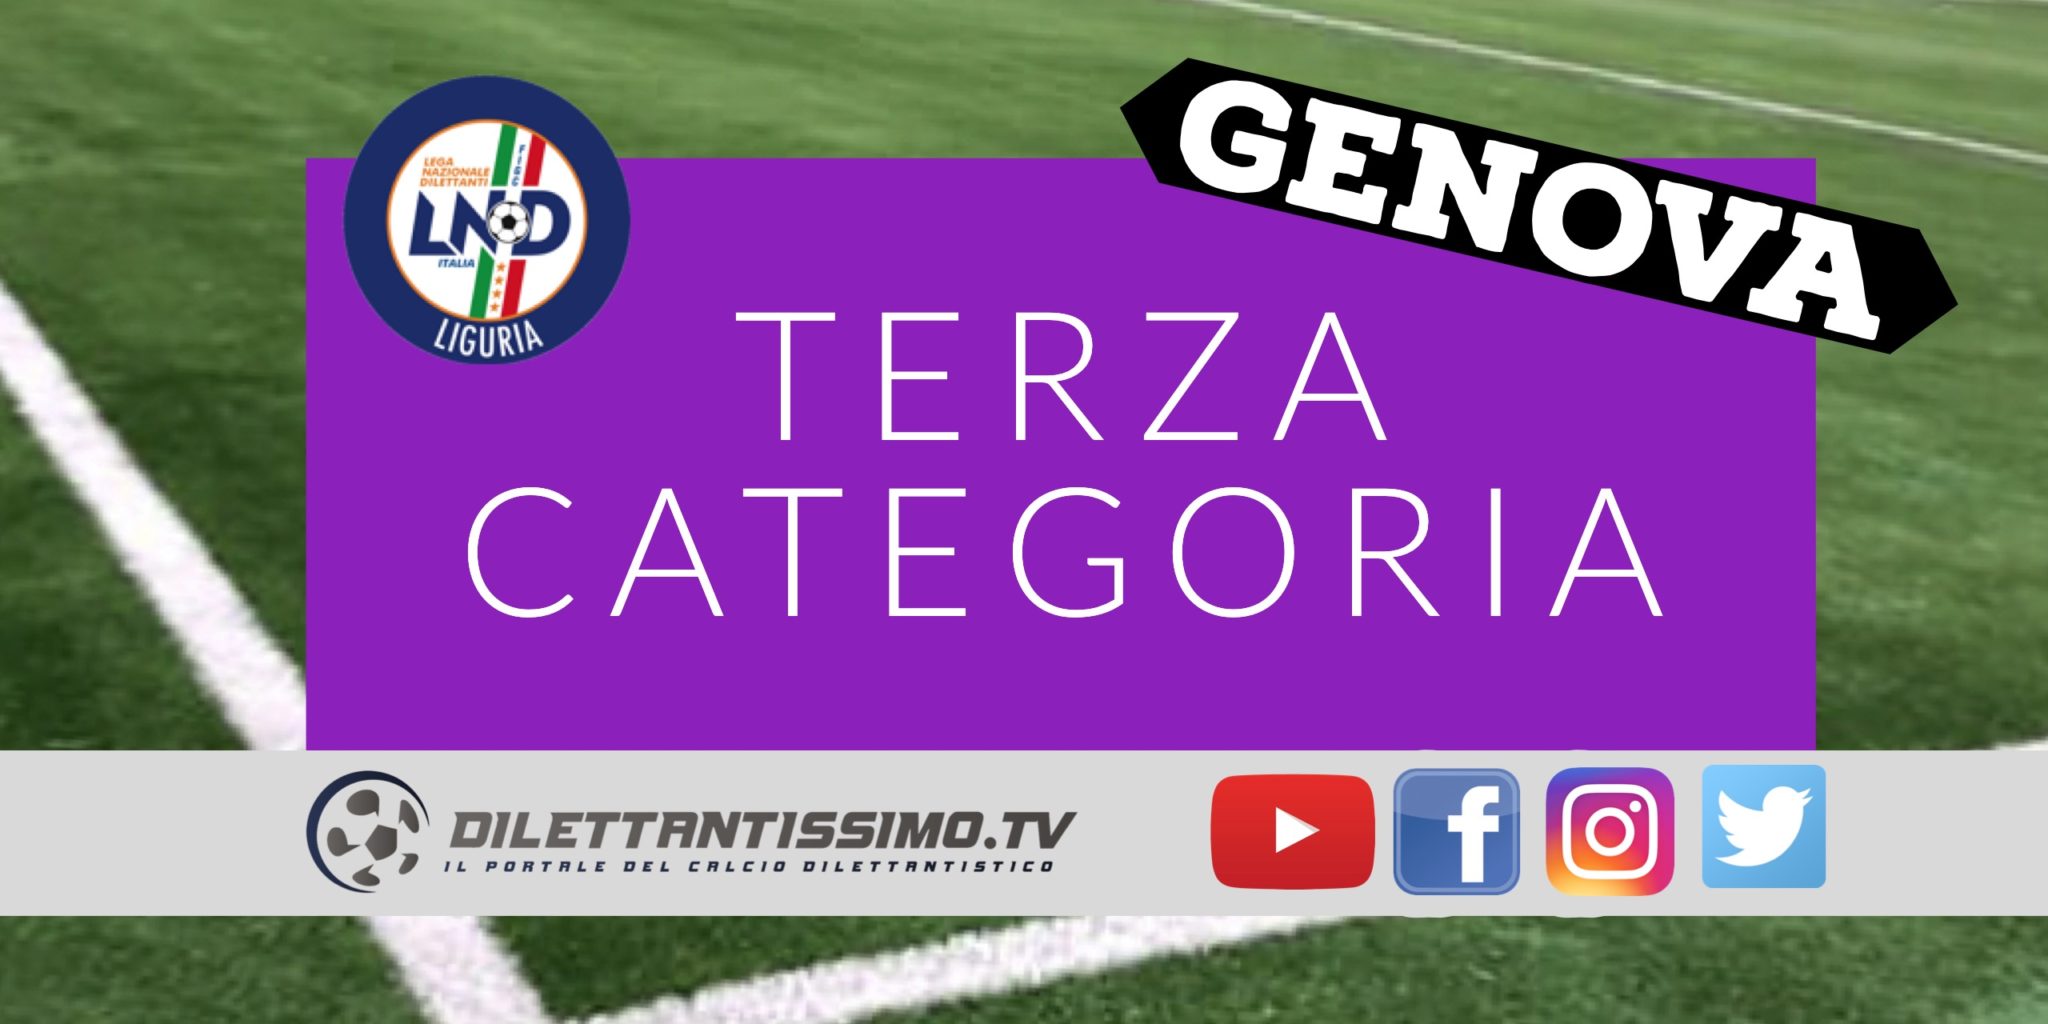 DIRETTA LIVE – TERZA CATEGORIA, 11ª GIORNATA